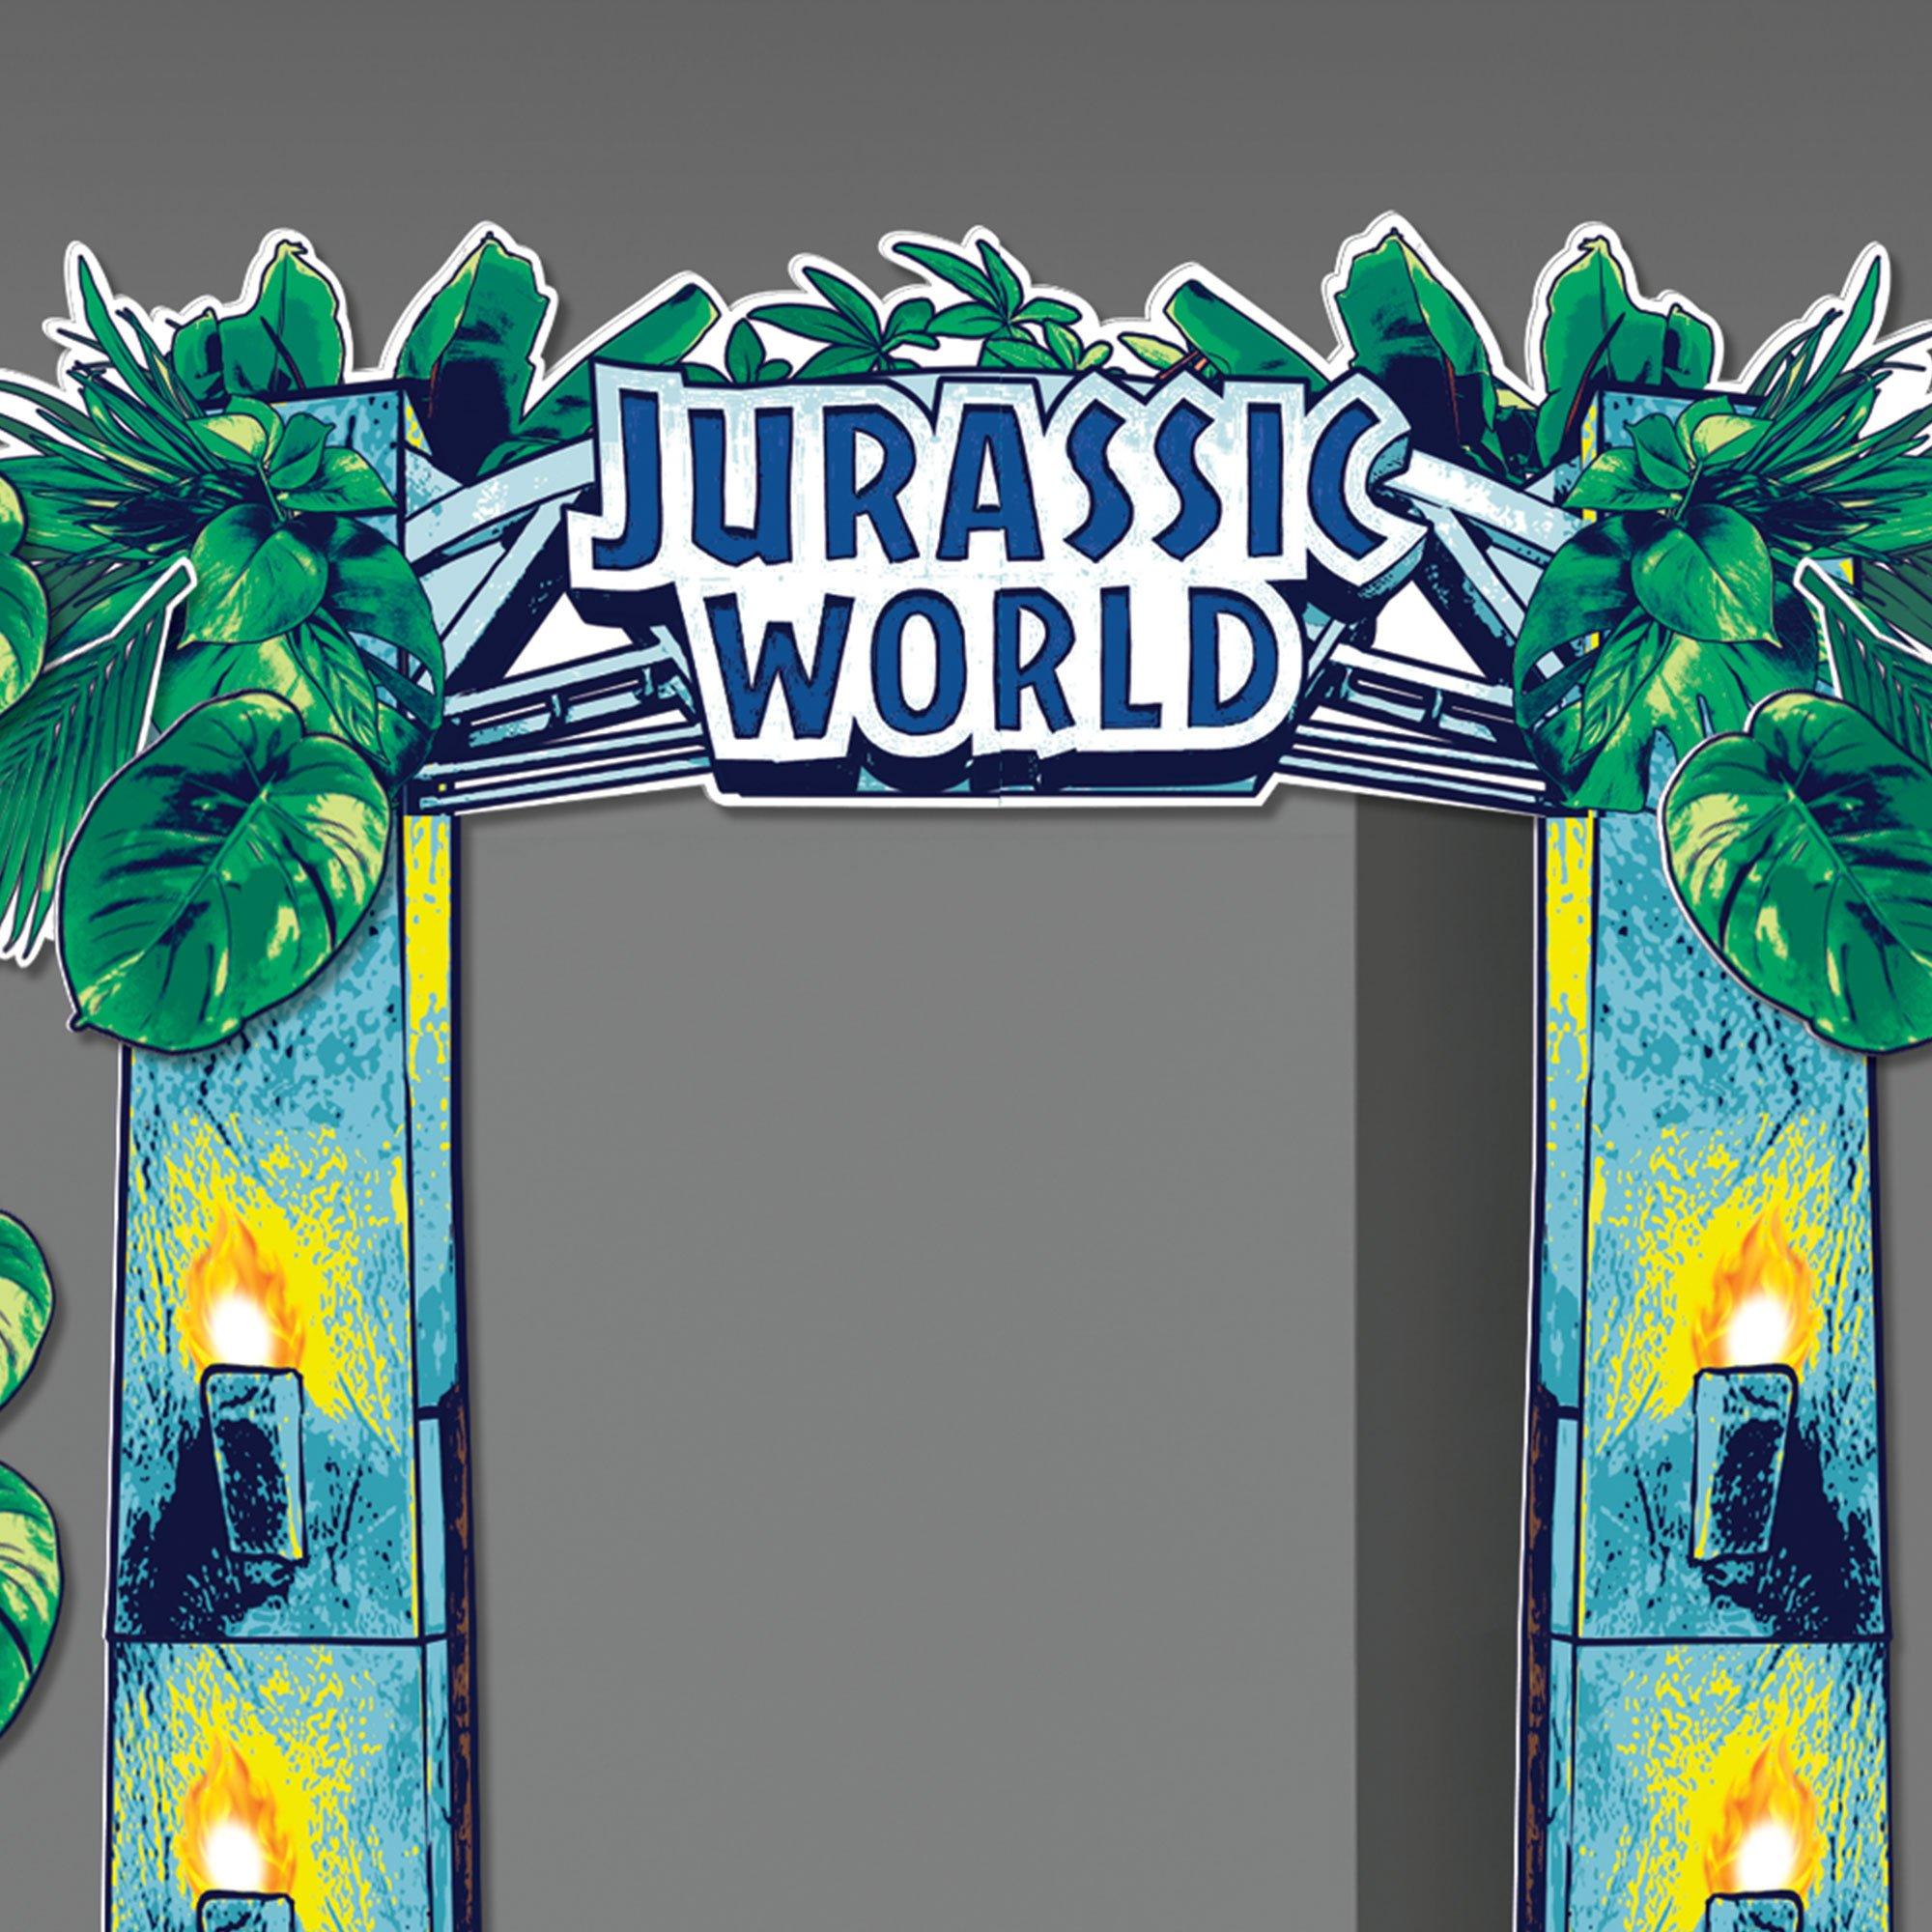 Jurassic World Cardstock Archway Door Decoration, 4.1ft x 6.25ft